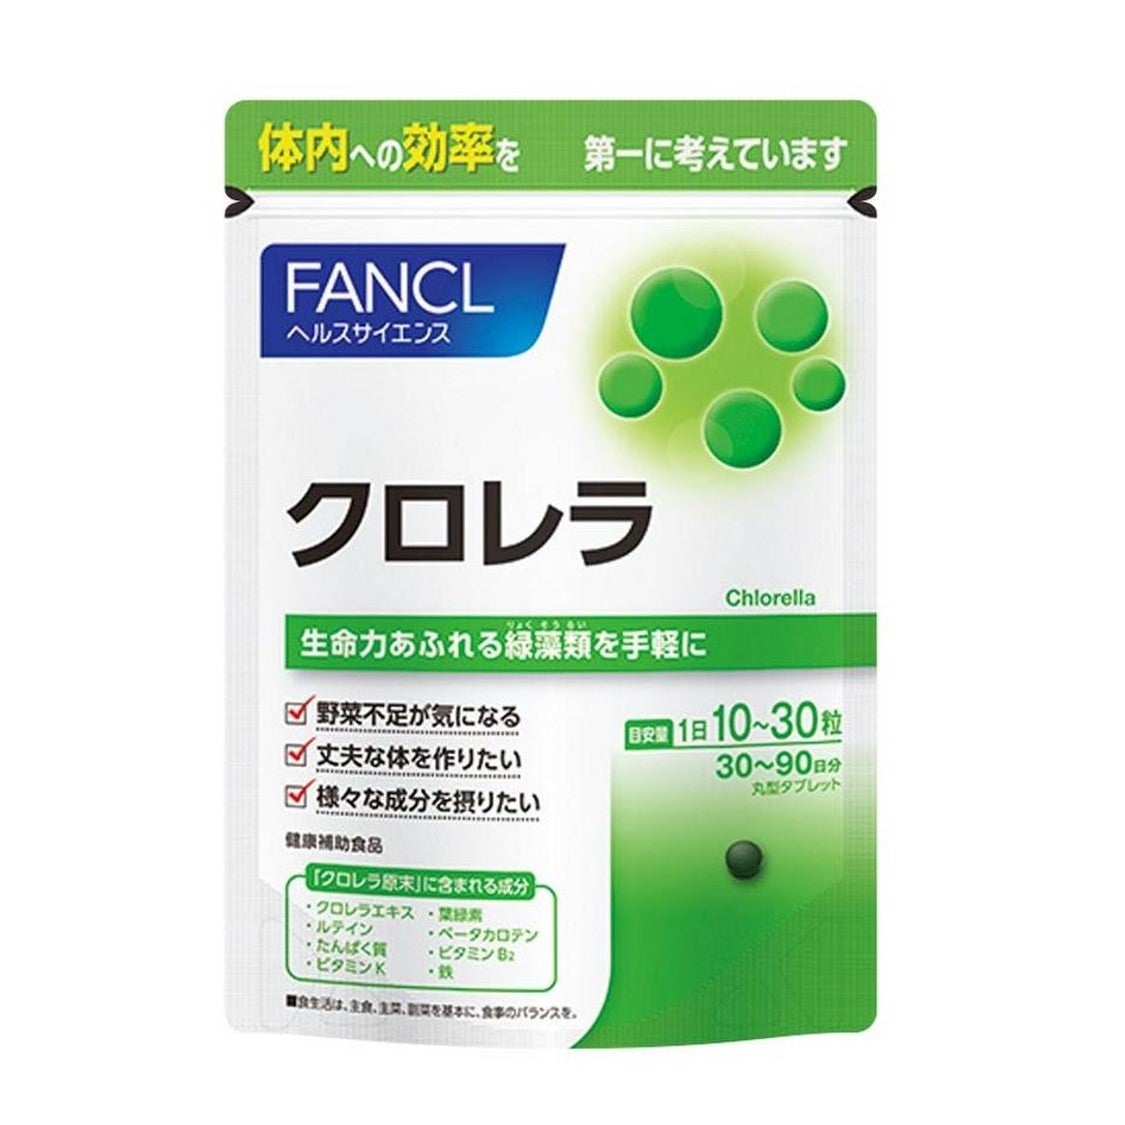 fancl-chlorella